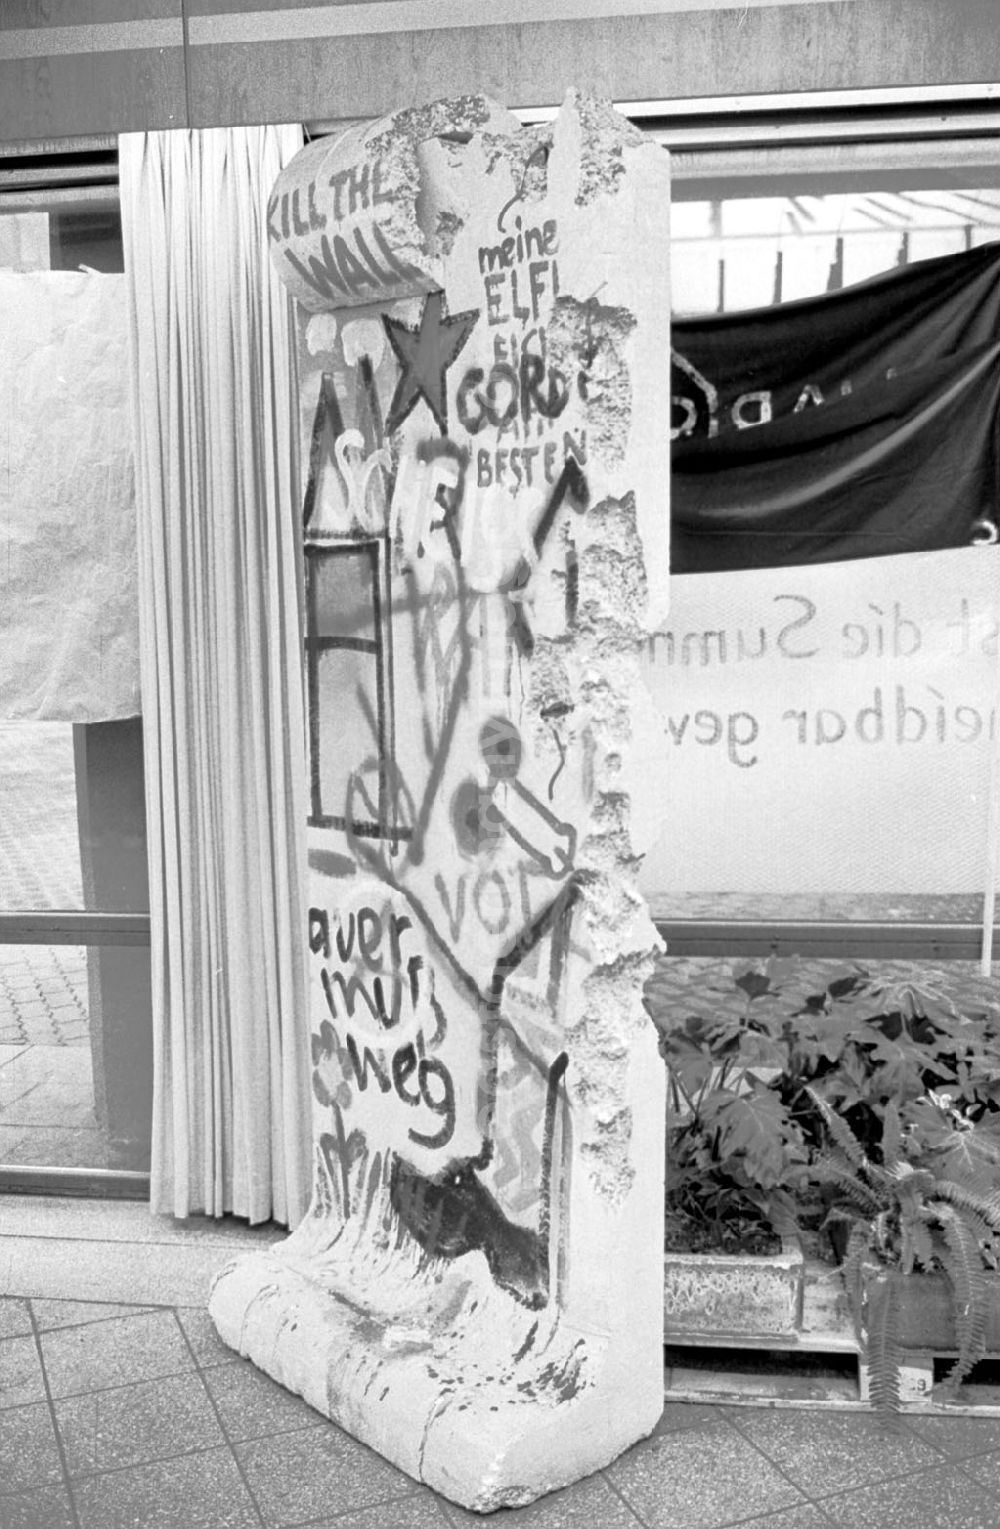 GDR image archive: Berlin-Mitte - Plakatausstellung am Fernsehturm 14.12.89